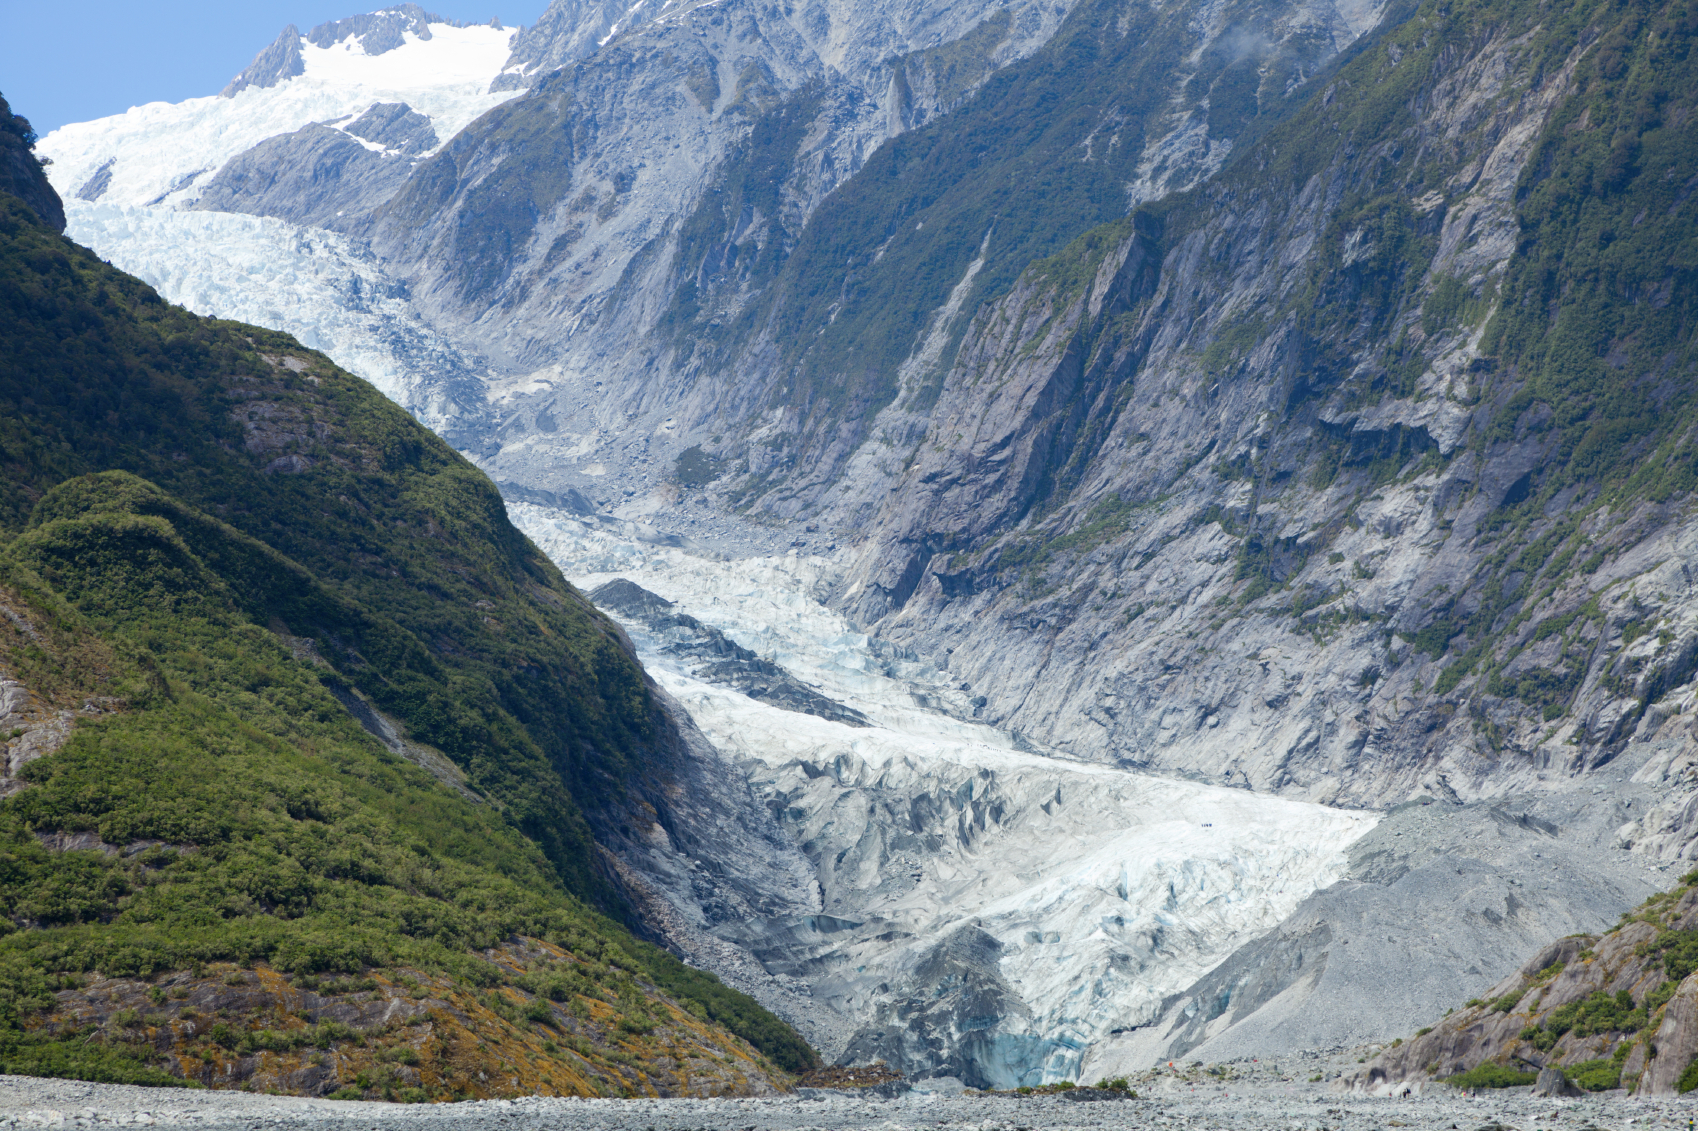 Scenic view of Franz Josef Glacier in New Zealand